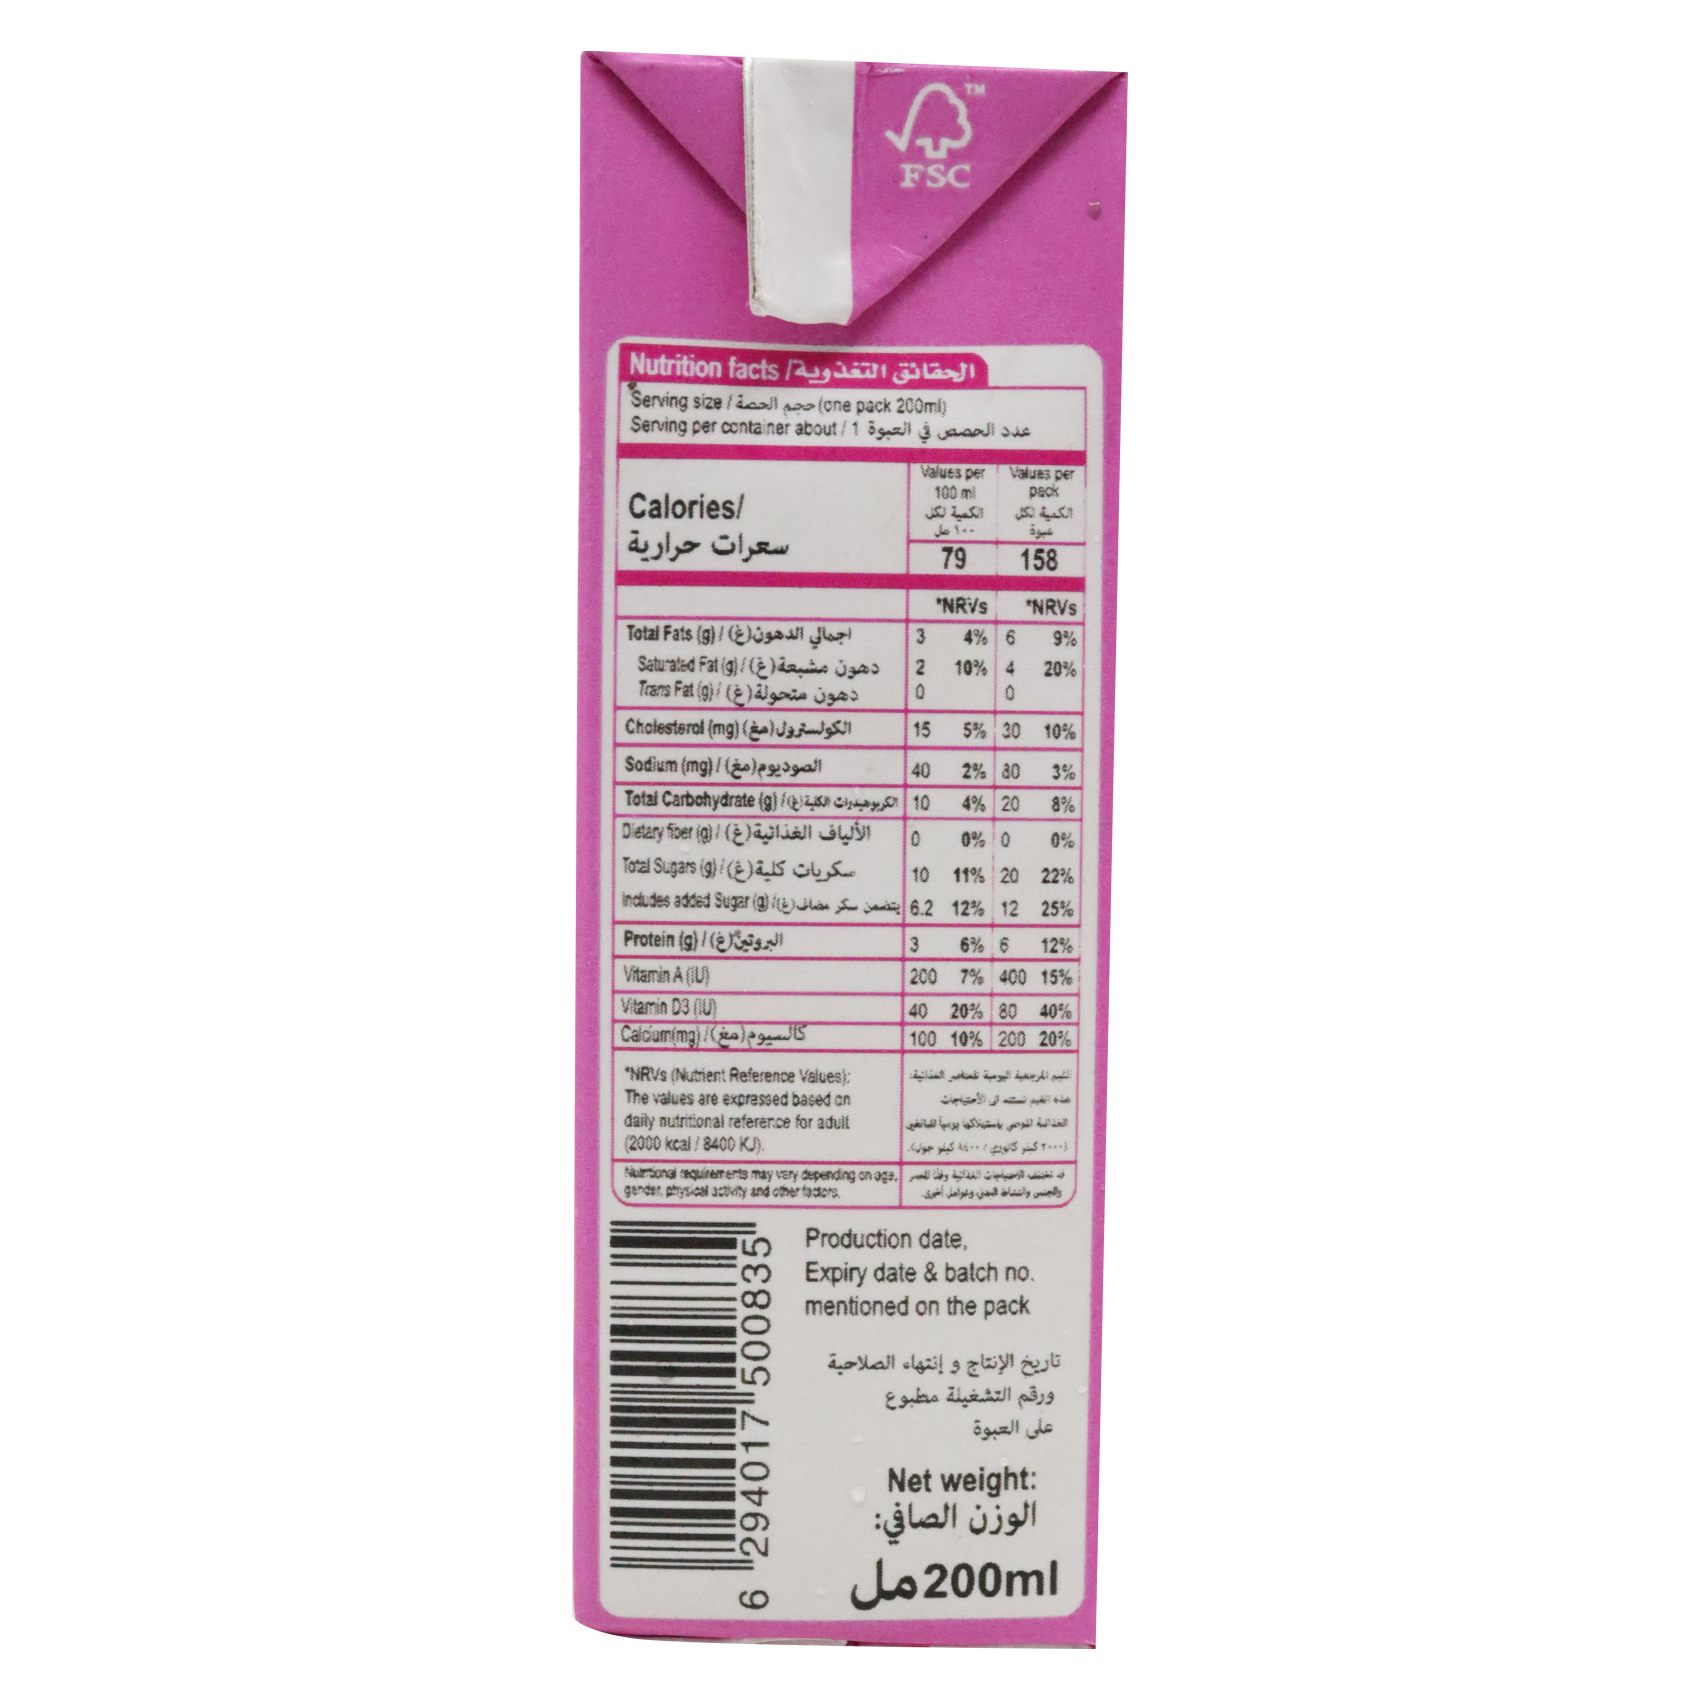 Carrefour Strawberry Flavour Milk 200ml